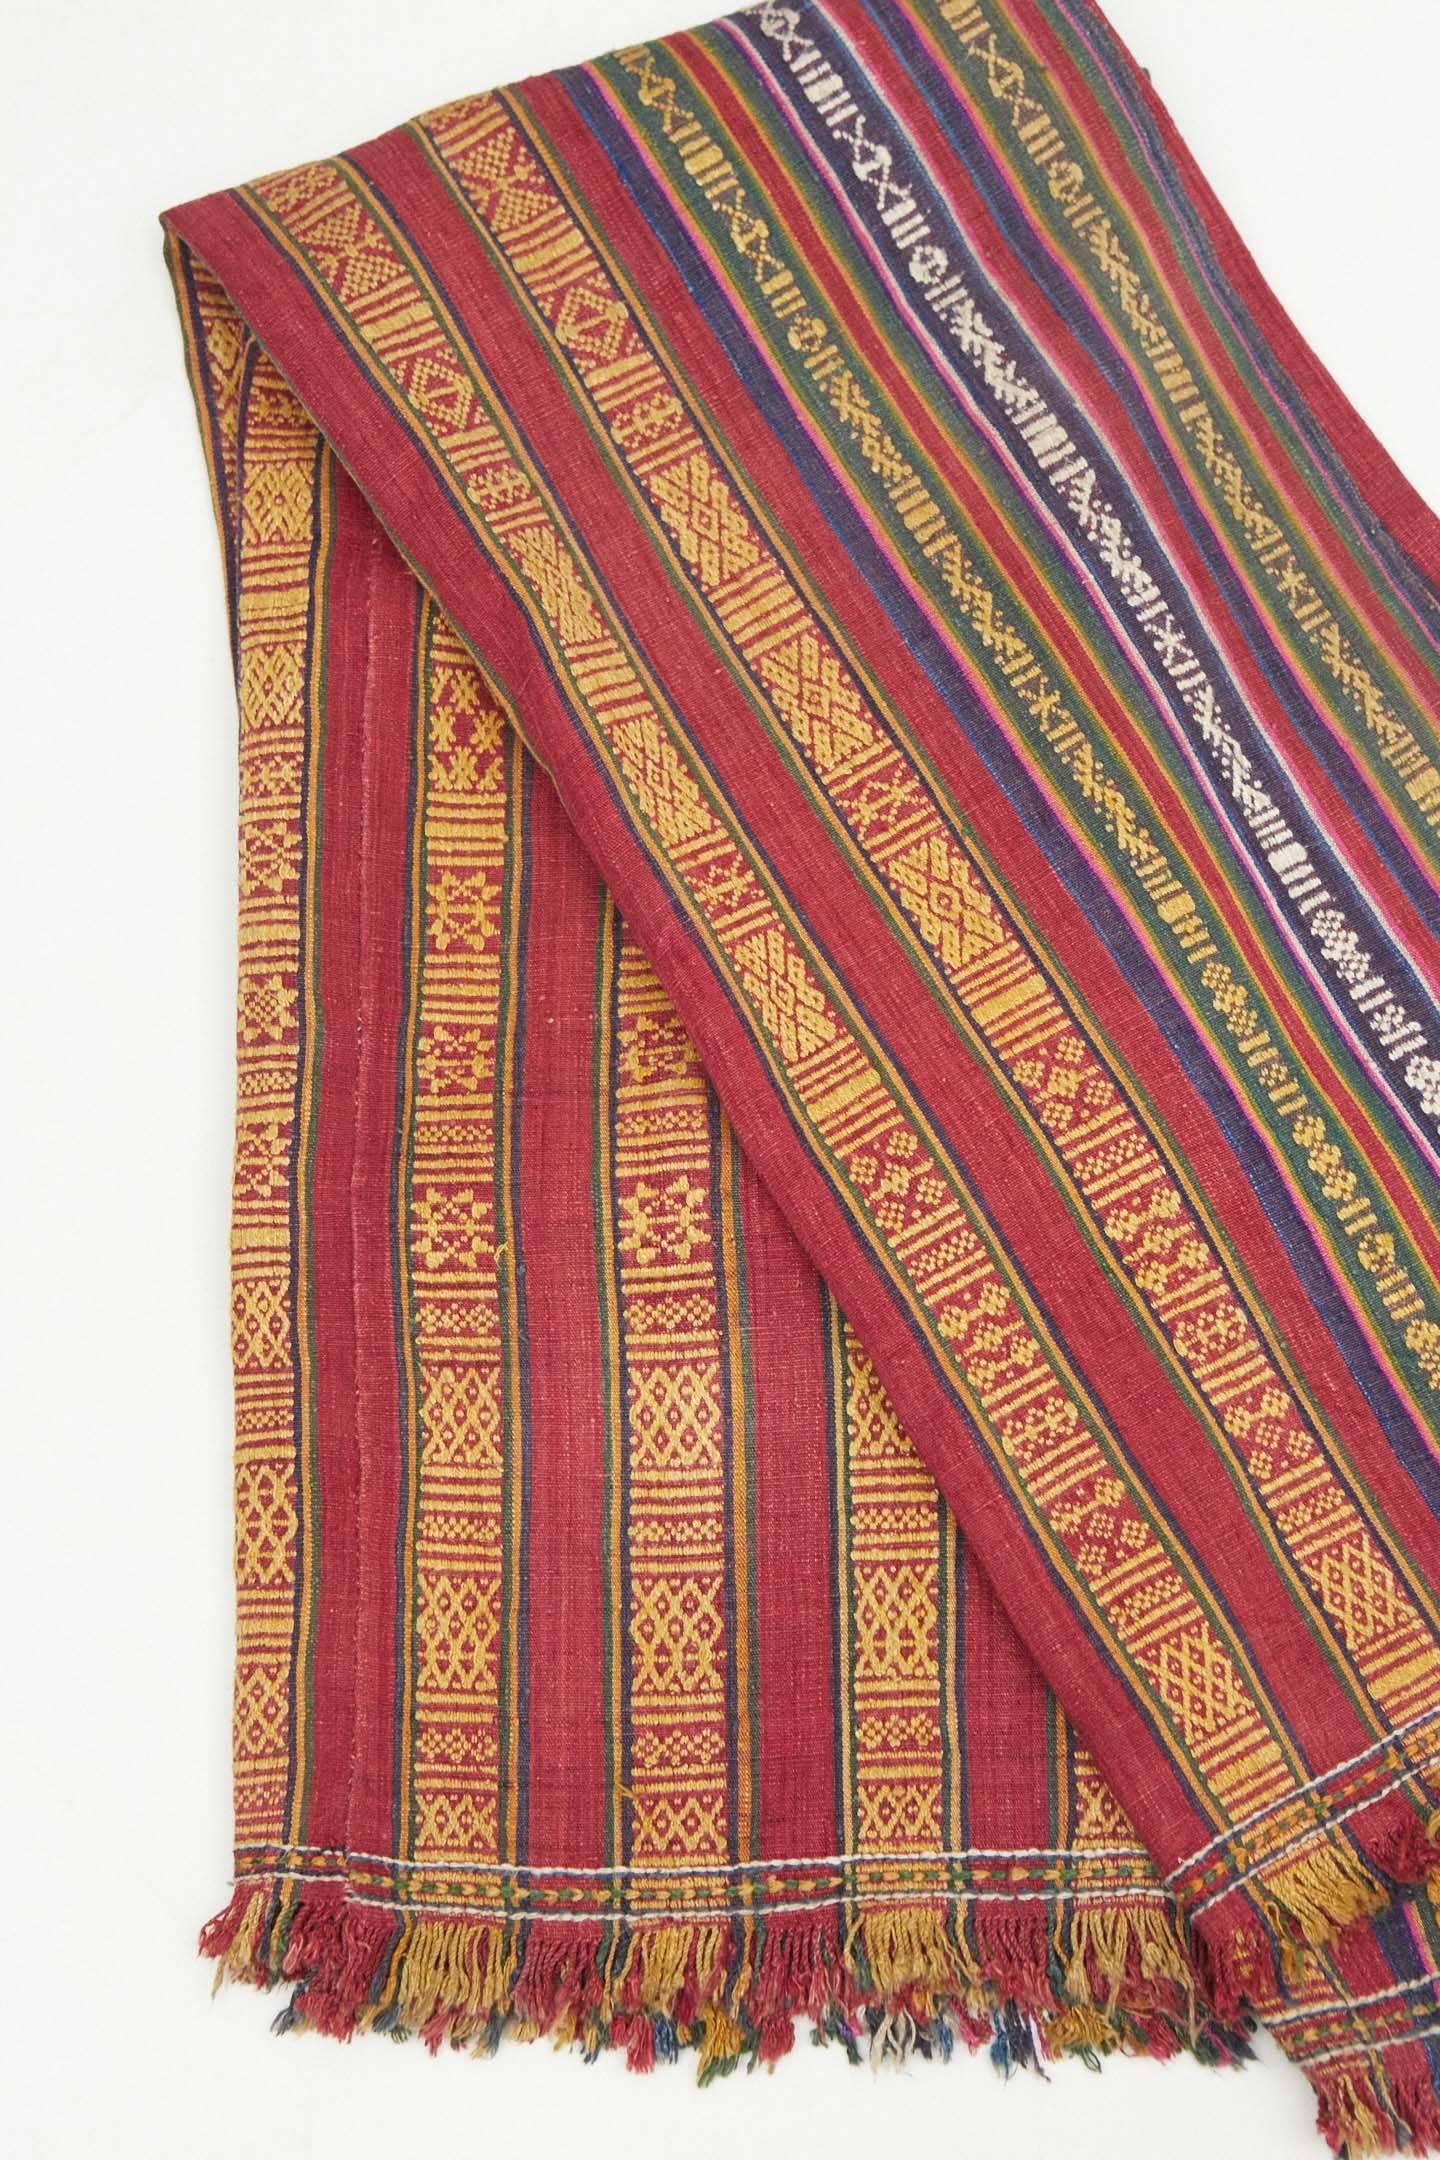 Hand-Woven Bhutanese Skirt Panel For Sale